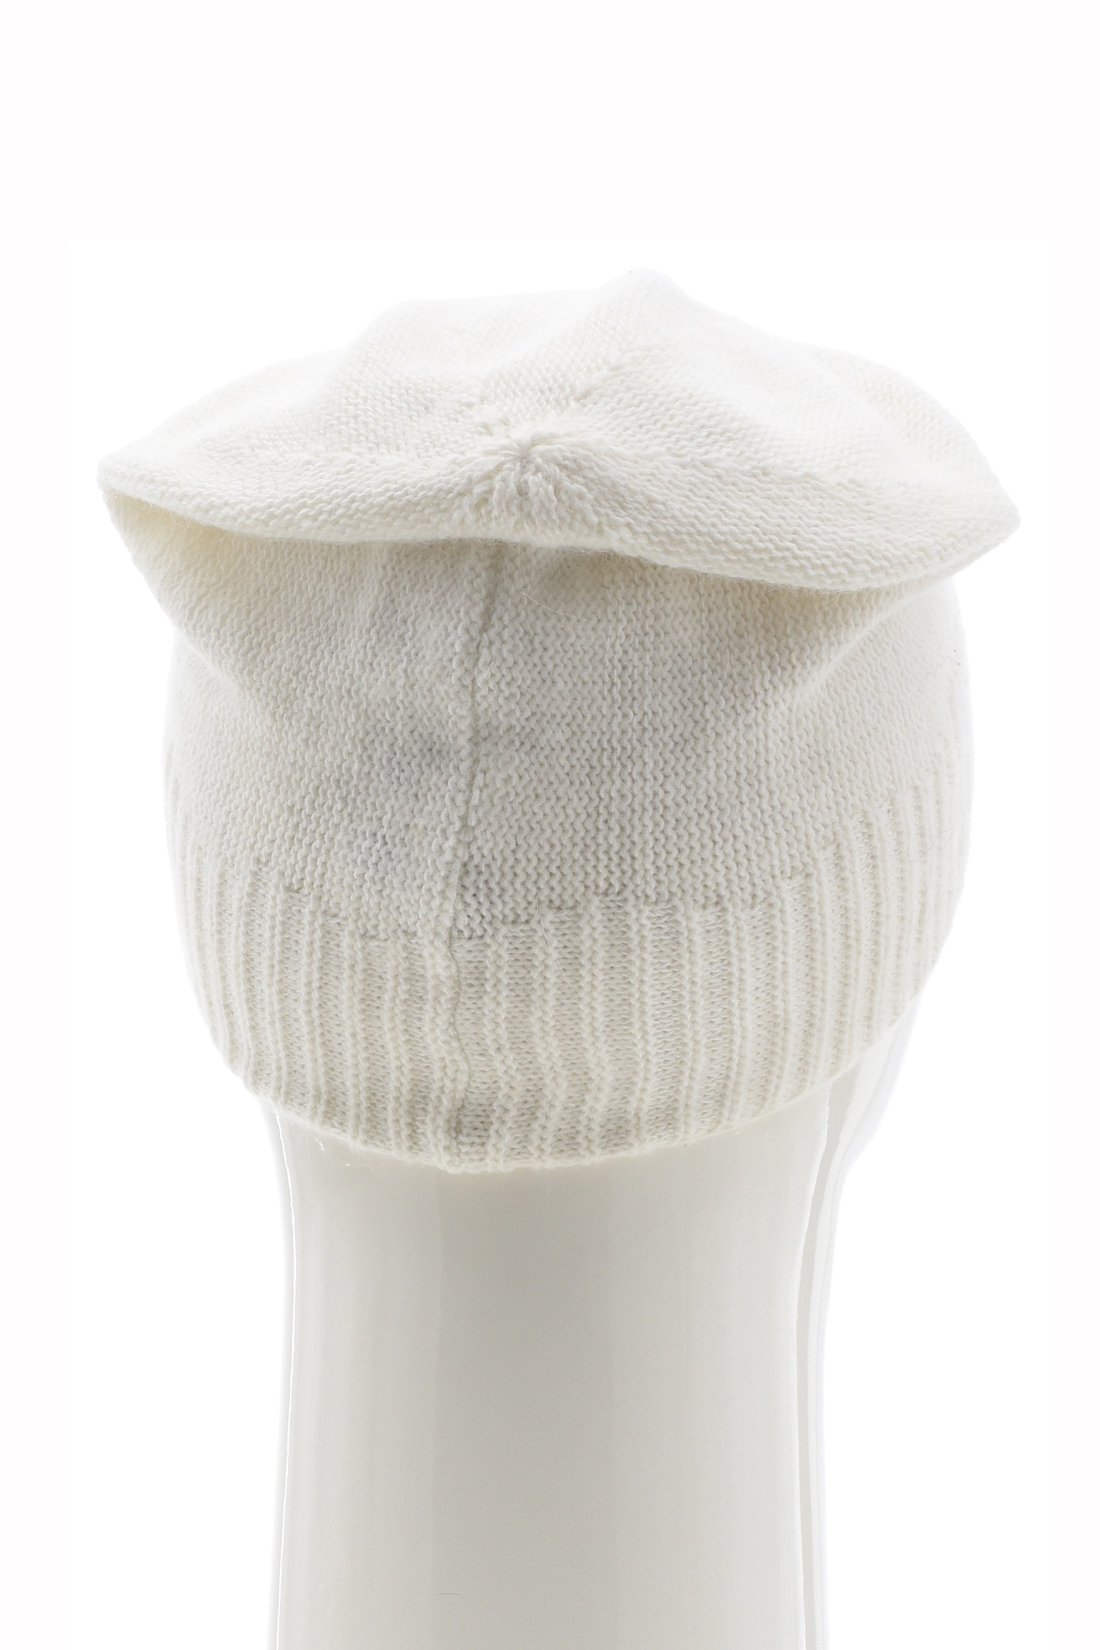 Полушерстяная шапка со стразами (арт. baon B348576), размер Б/р 56, цвет белый Полушерстяная шапка со стразами (арт. baon B348576) - фото 4